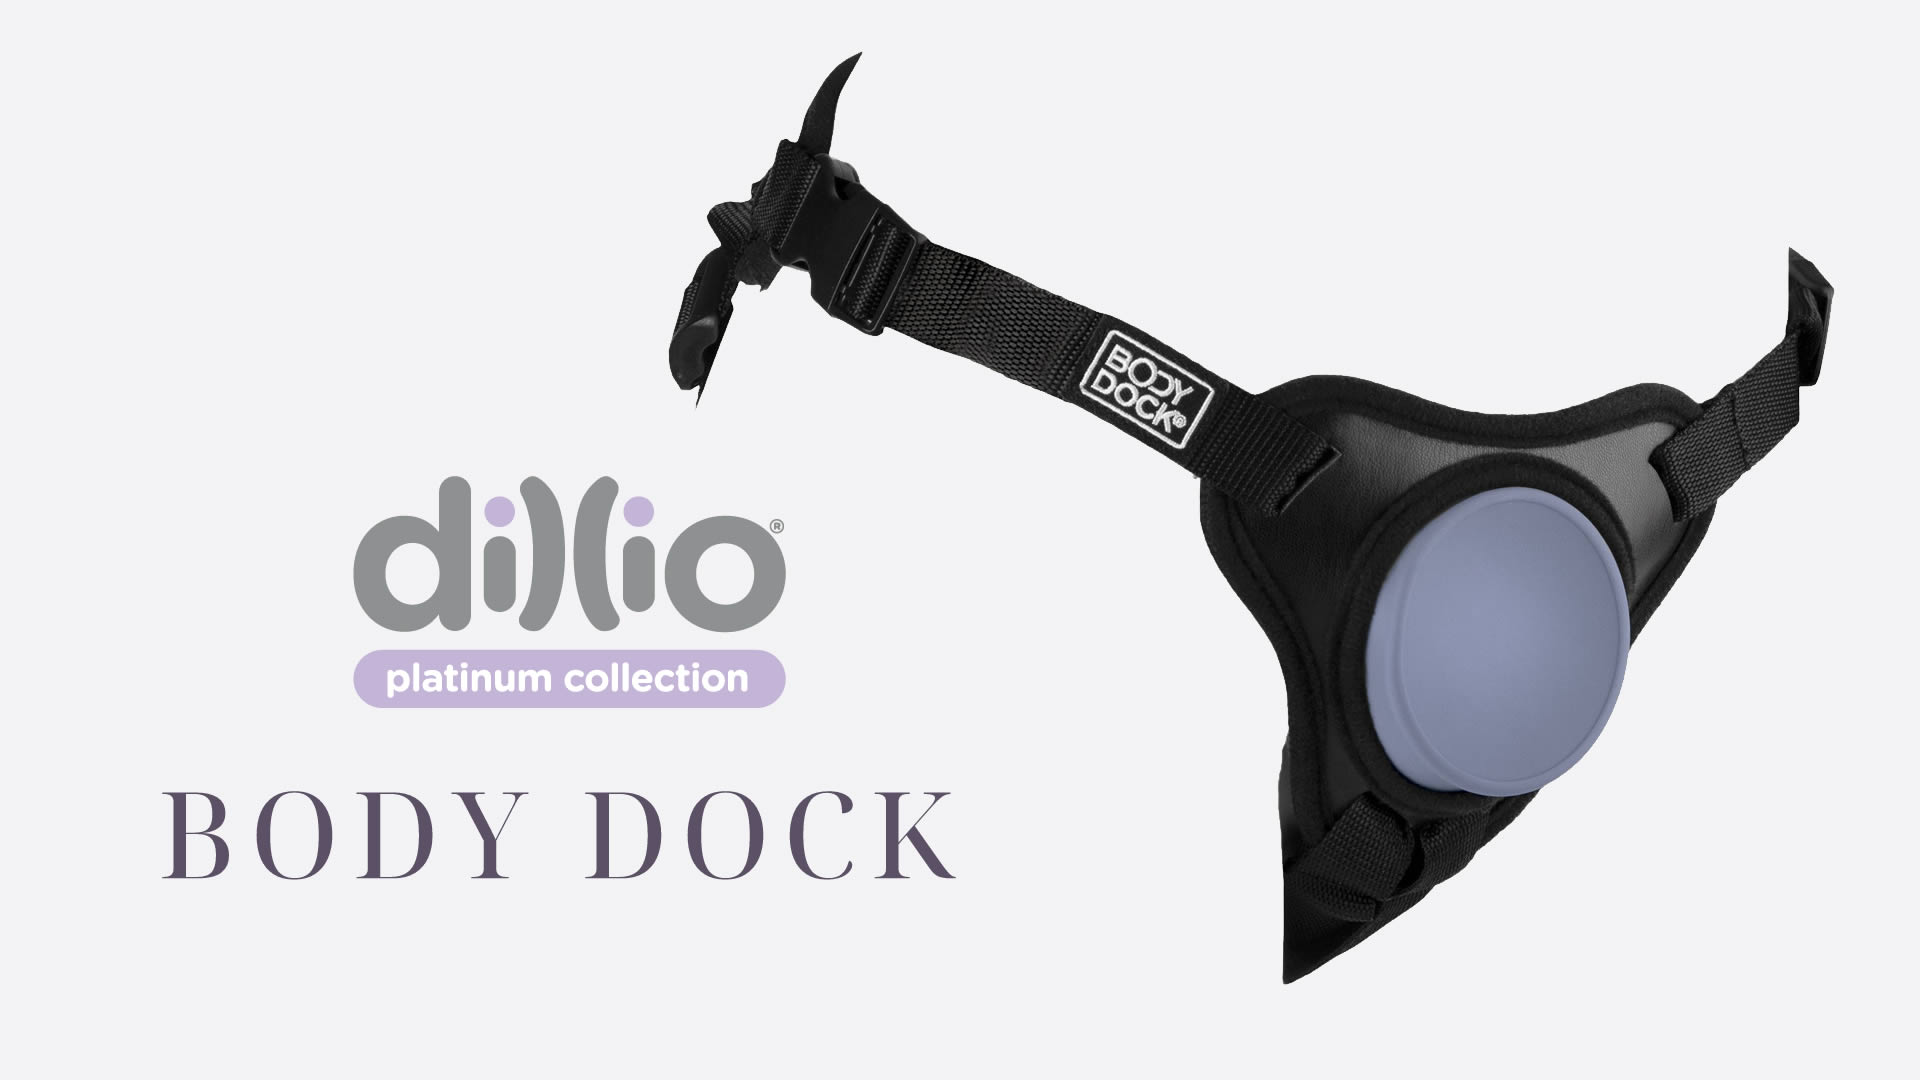 Dillio Platinum Body Dock Strap-On Harness